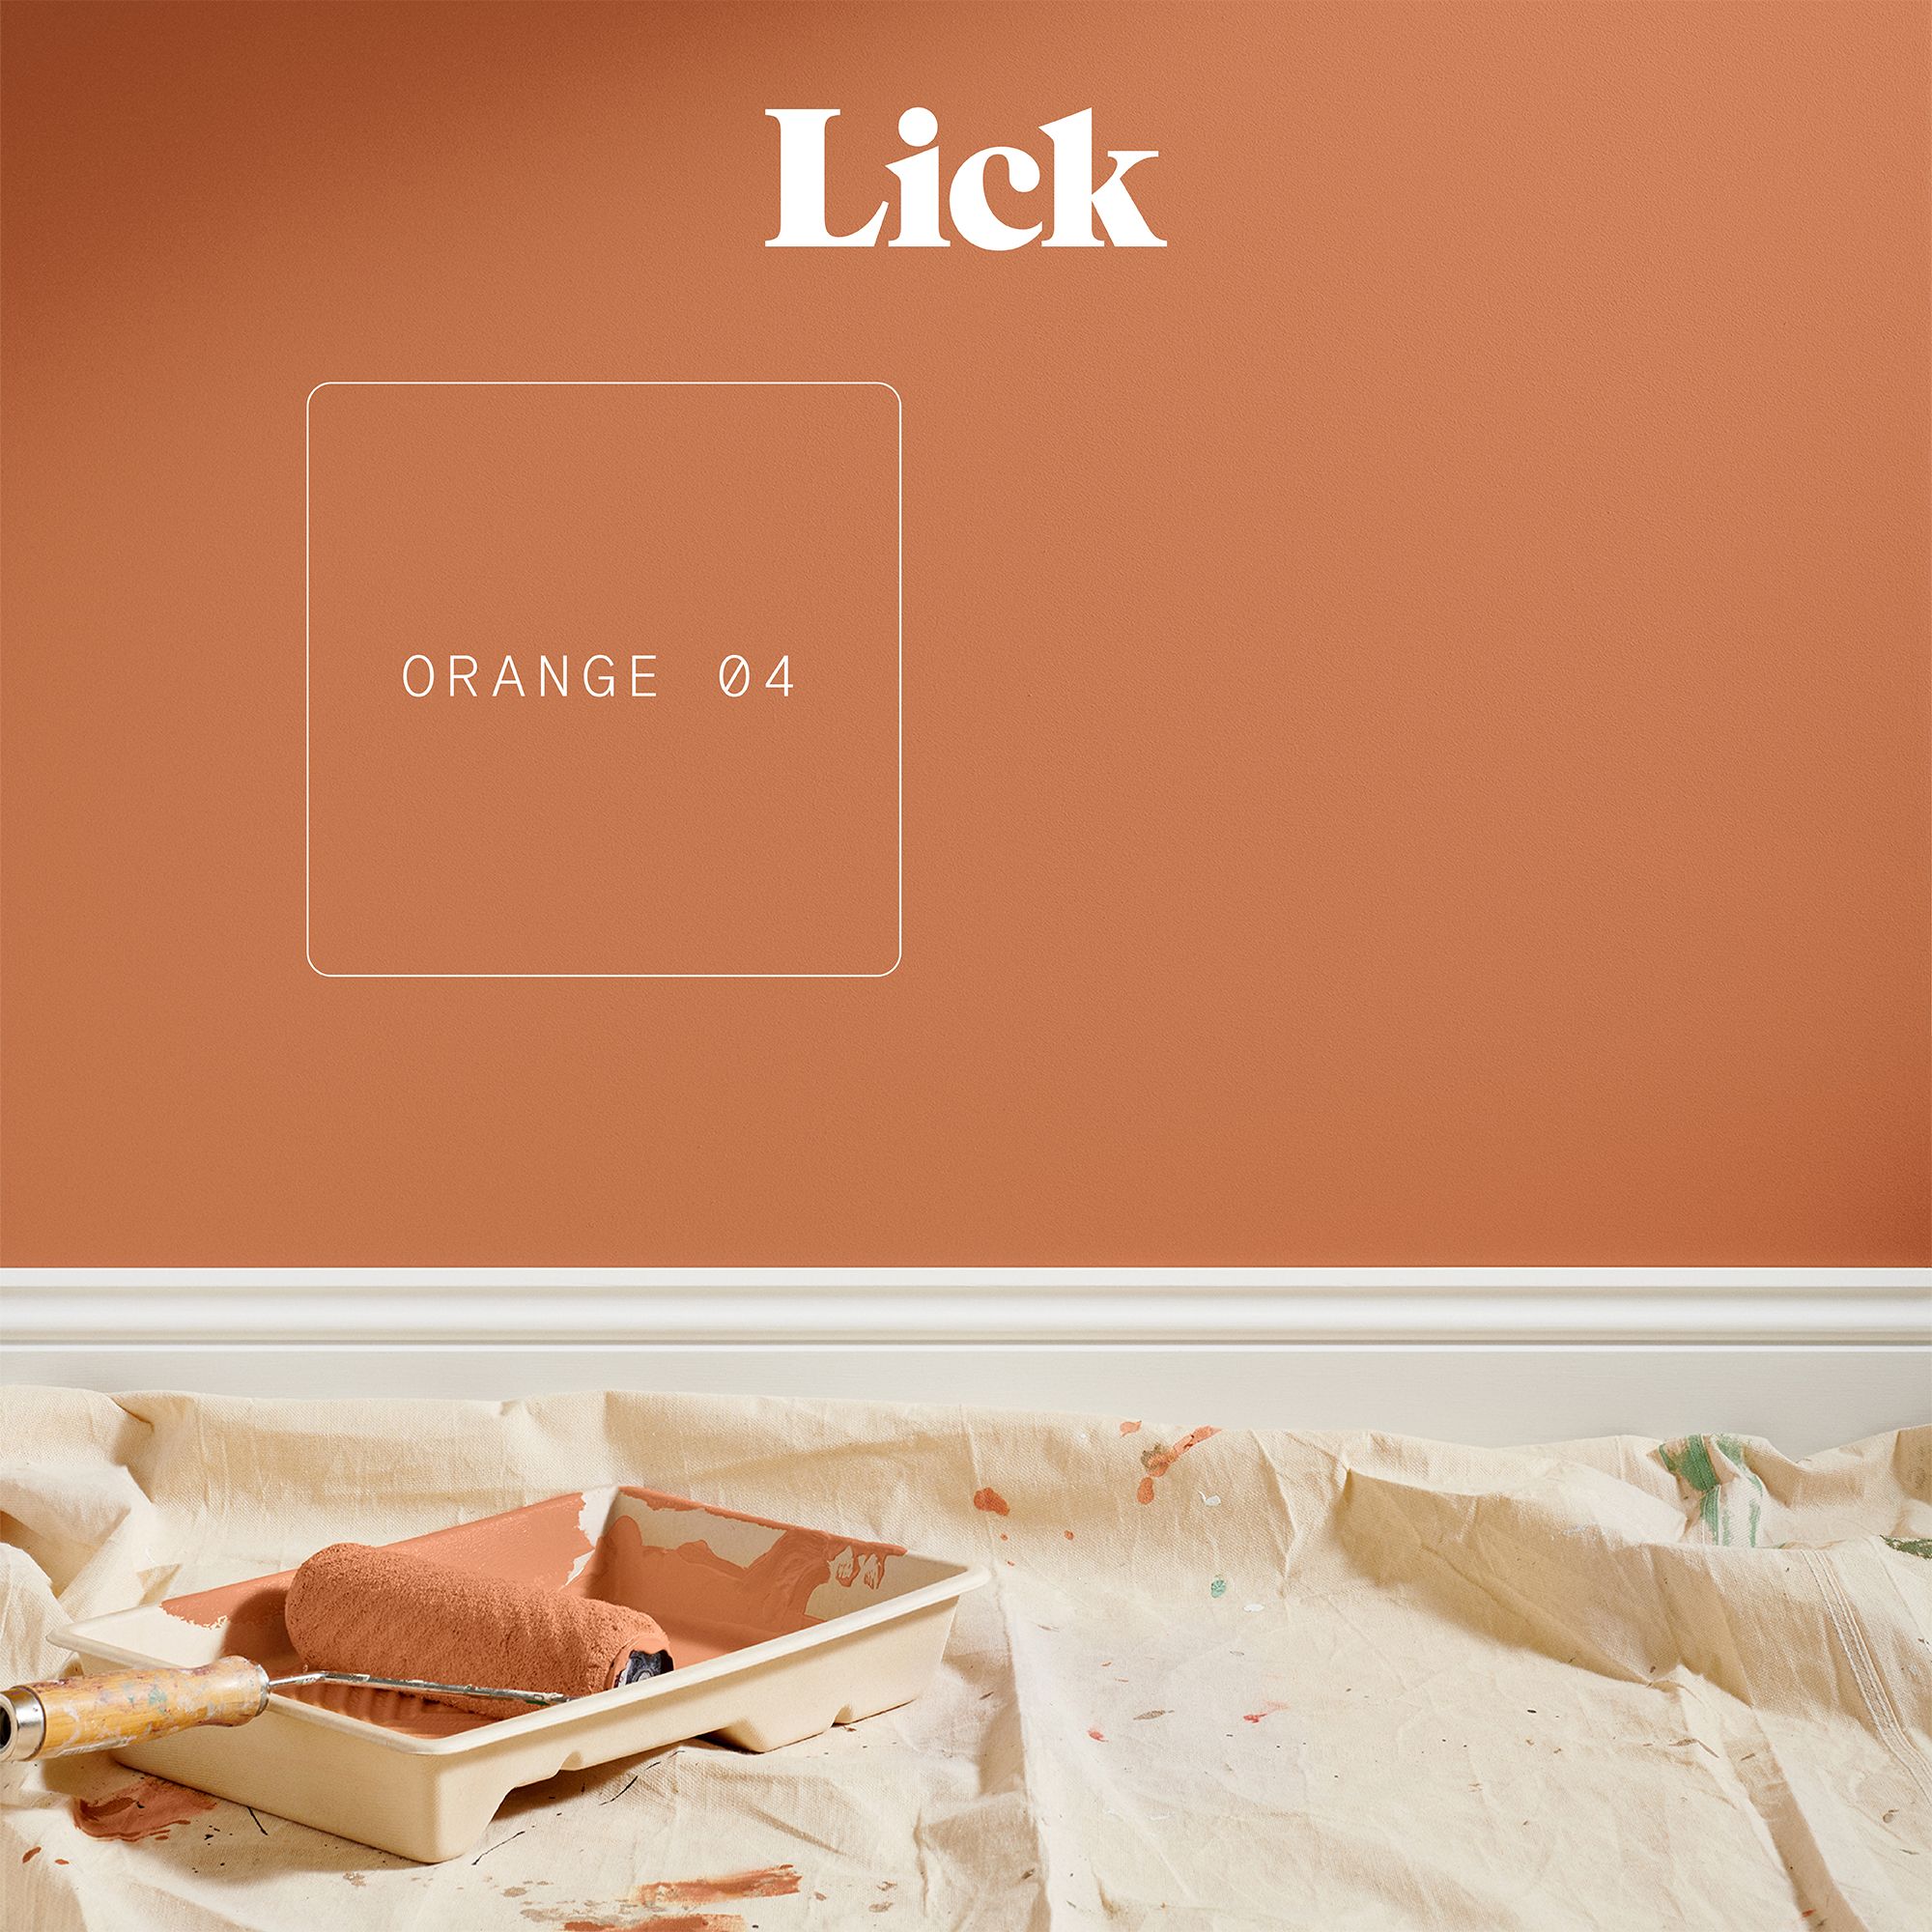 Lick Orange 04 Peel & stick Tester